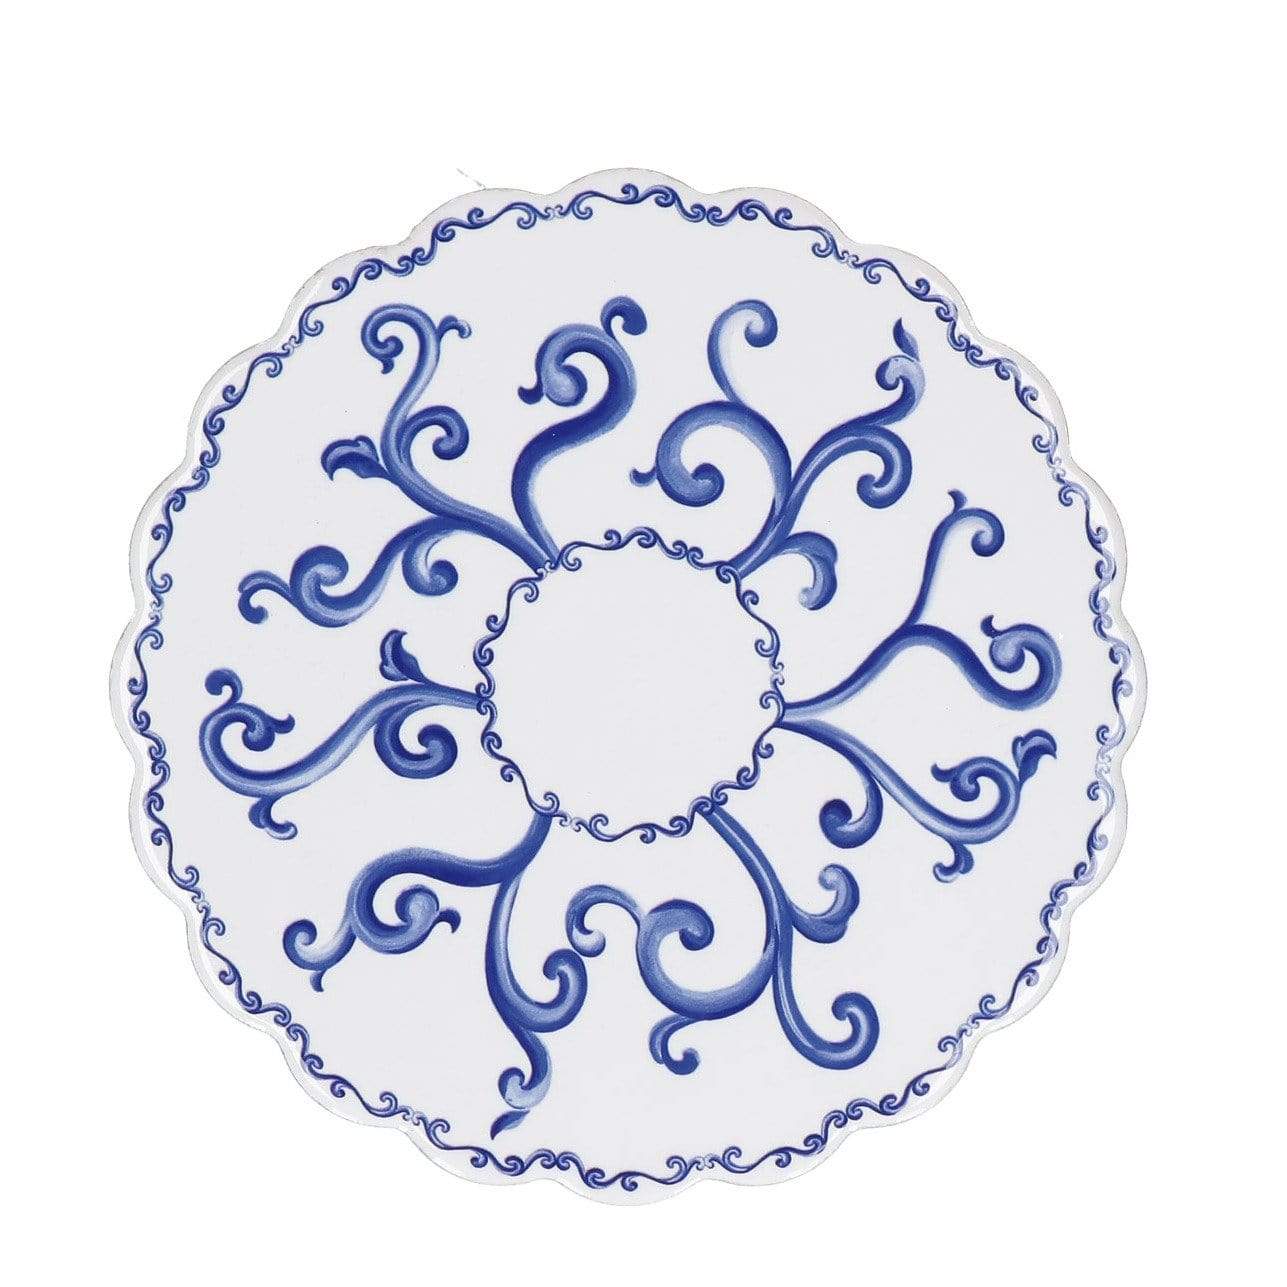 Porto Cervo Sottopentola in Ceramica Colore Blu 18 cm - Dolci pensieri gift